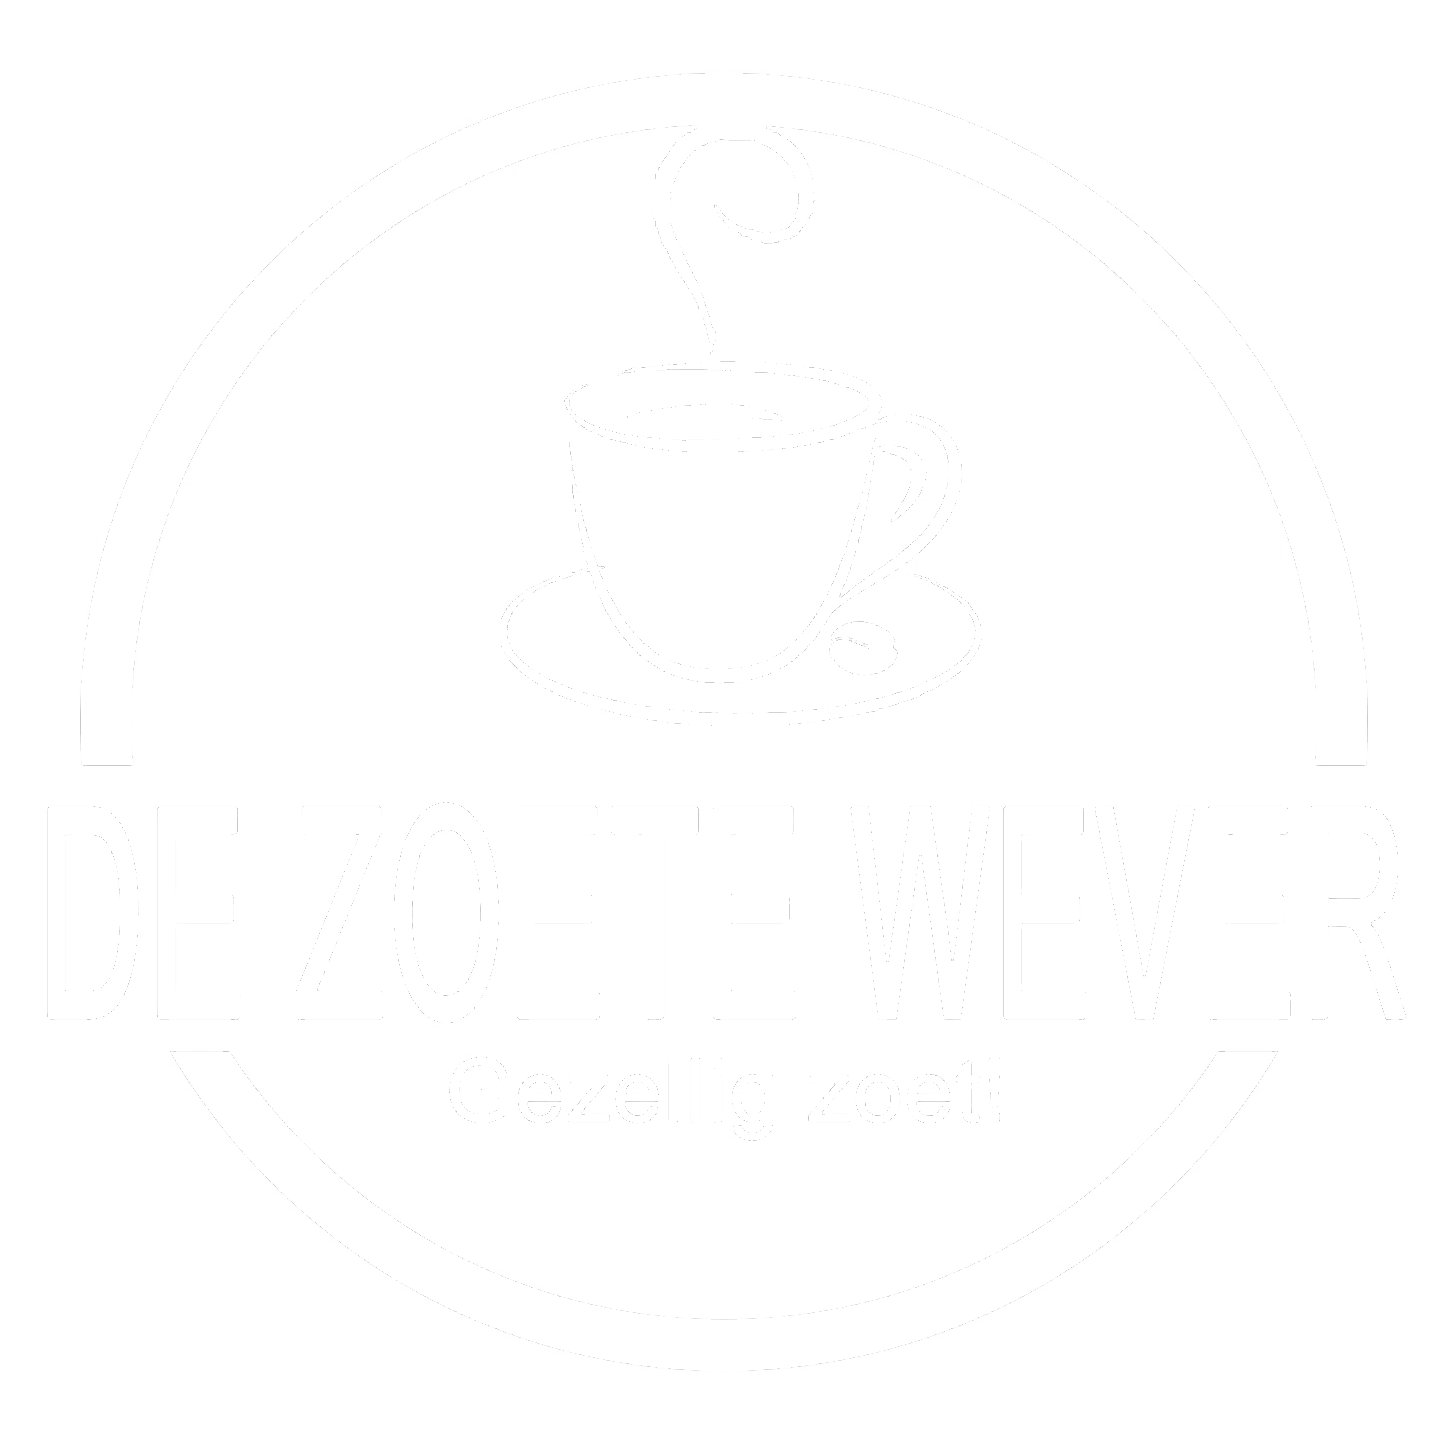 De Zoete Wever